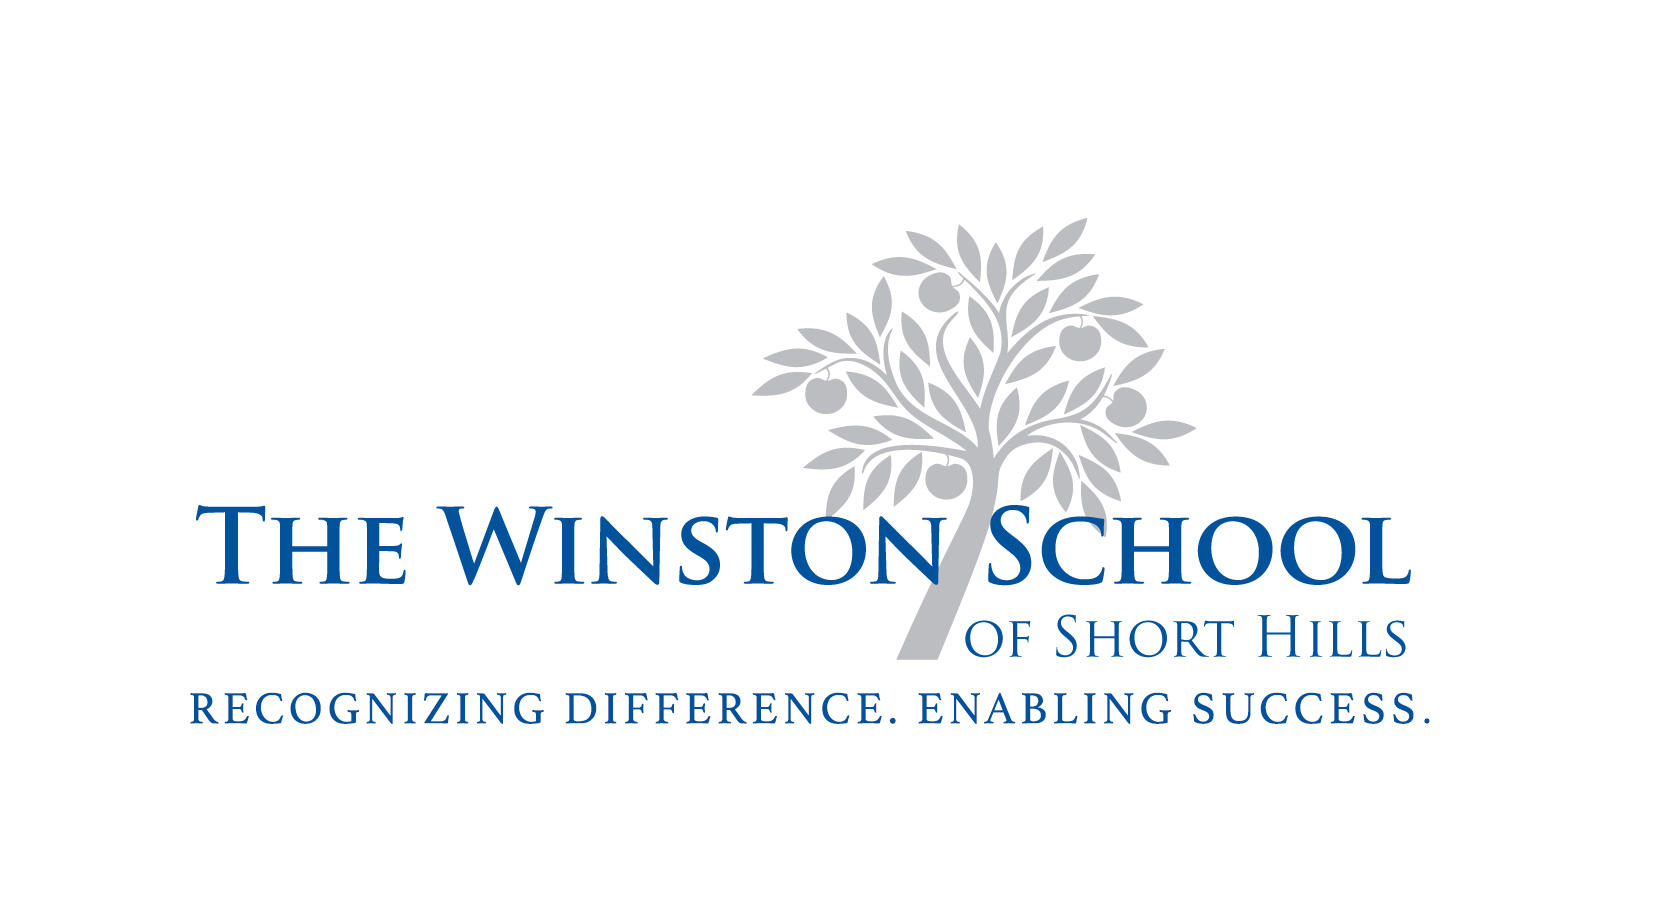 The Winston School of Short Hills